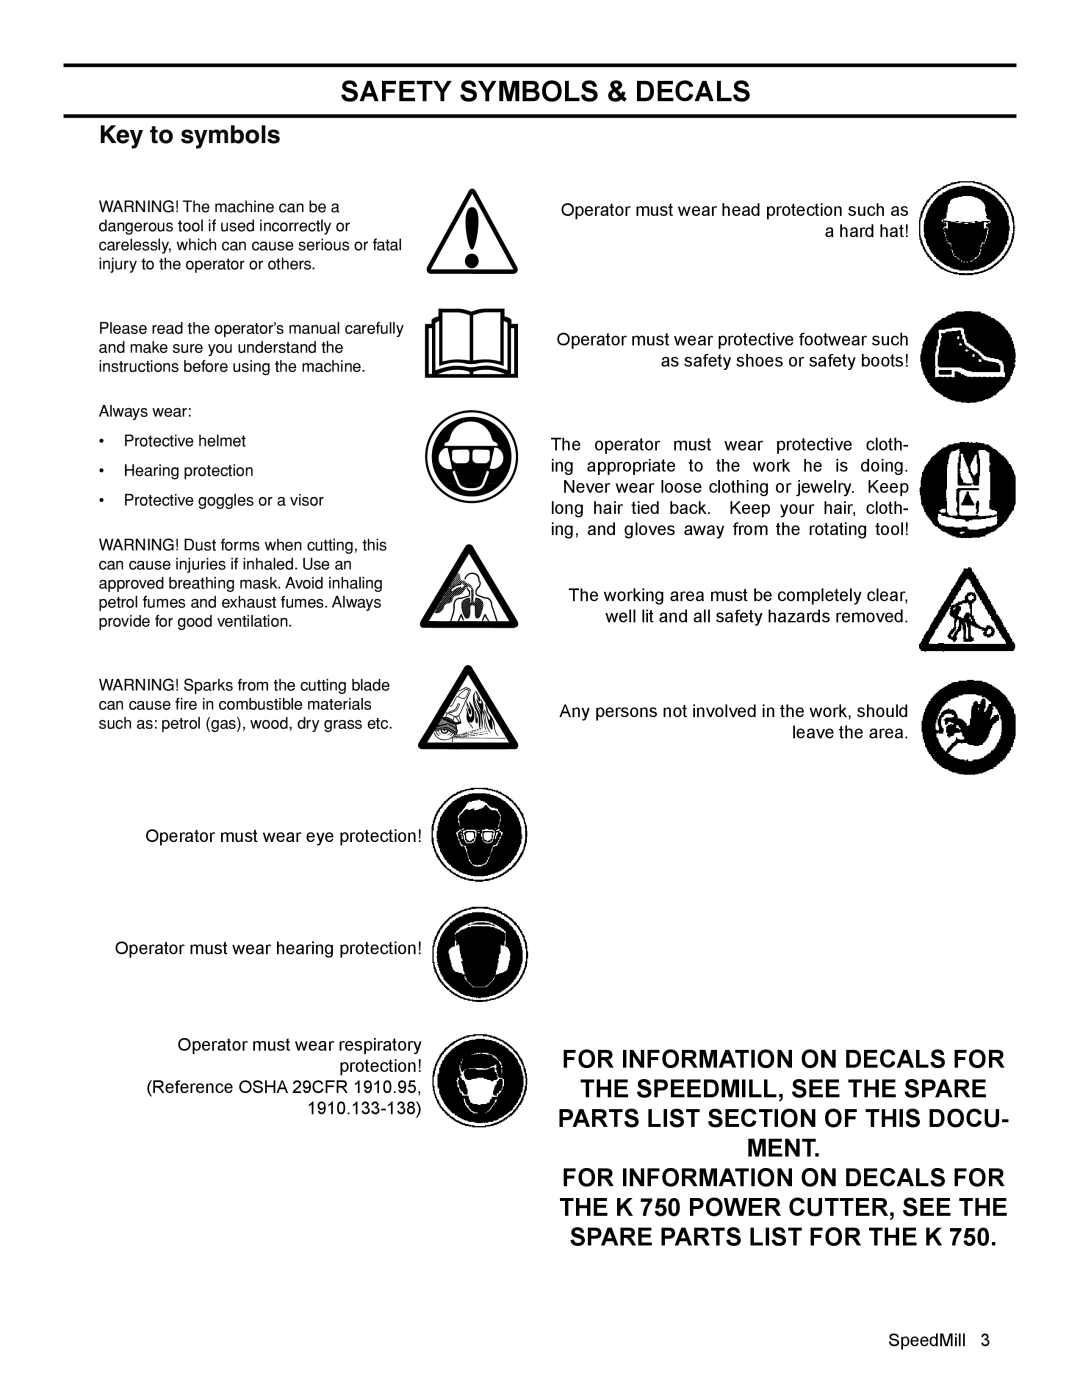 Husqvarna K 750 manual Safety Symbols & Decals, Key to symbols 